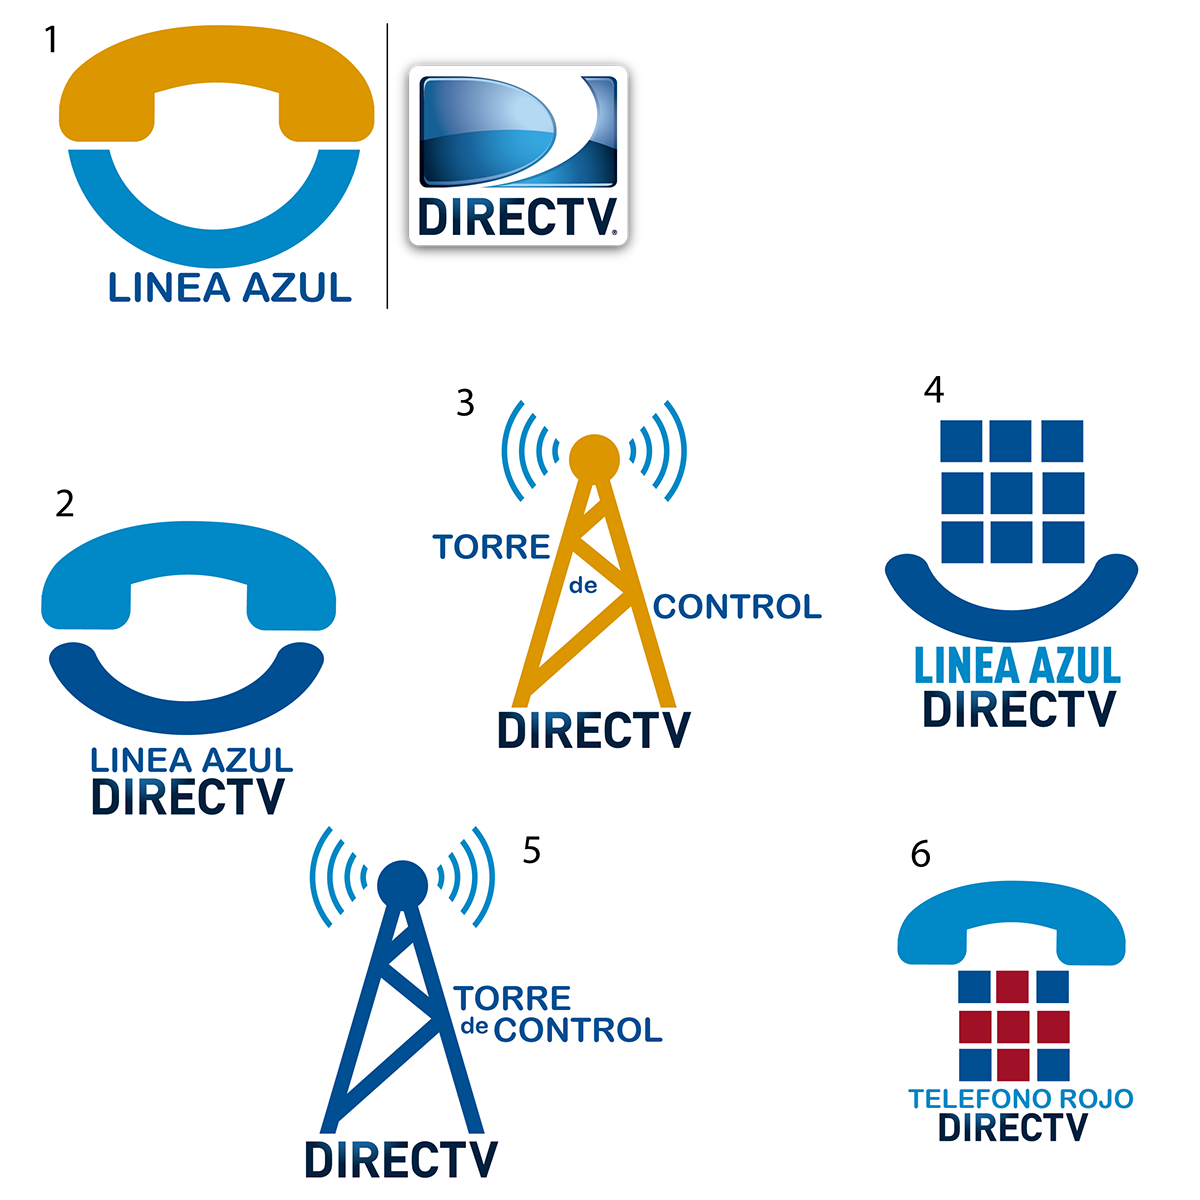 DirecTV logos richard cuellar colombia Cali line telecomunications phone call center